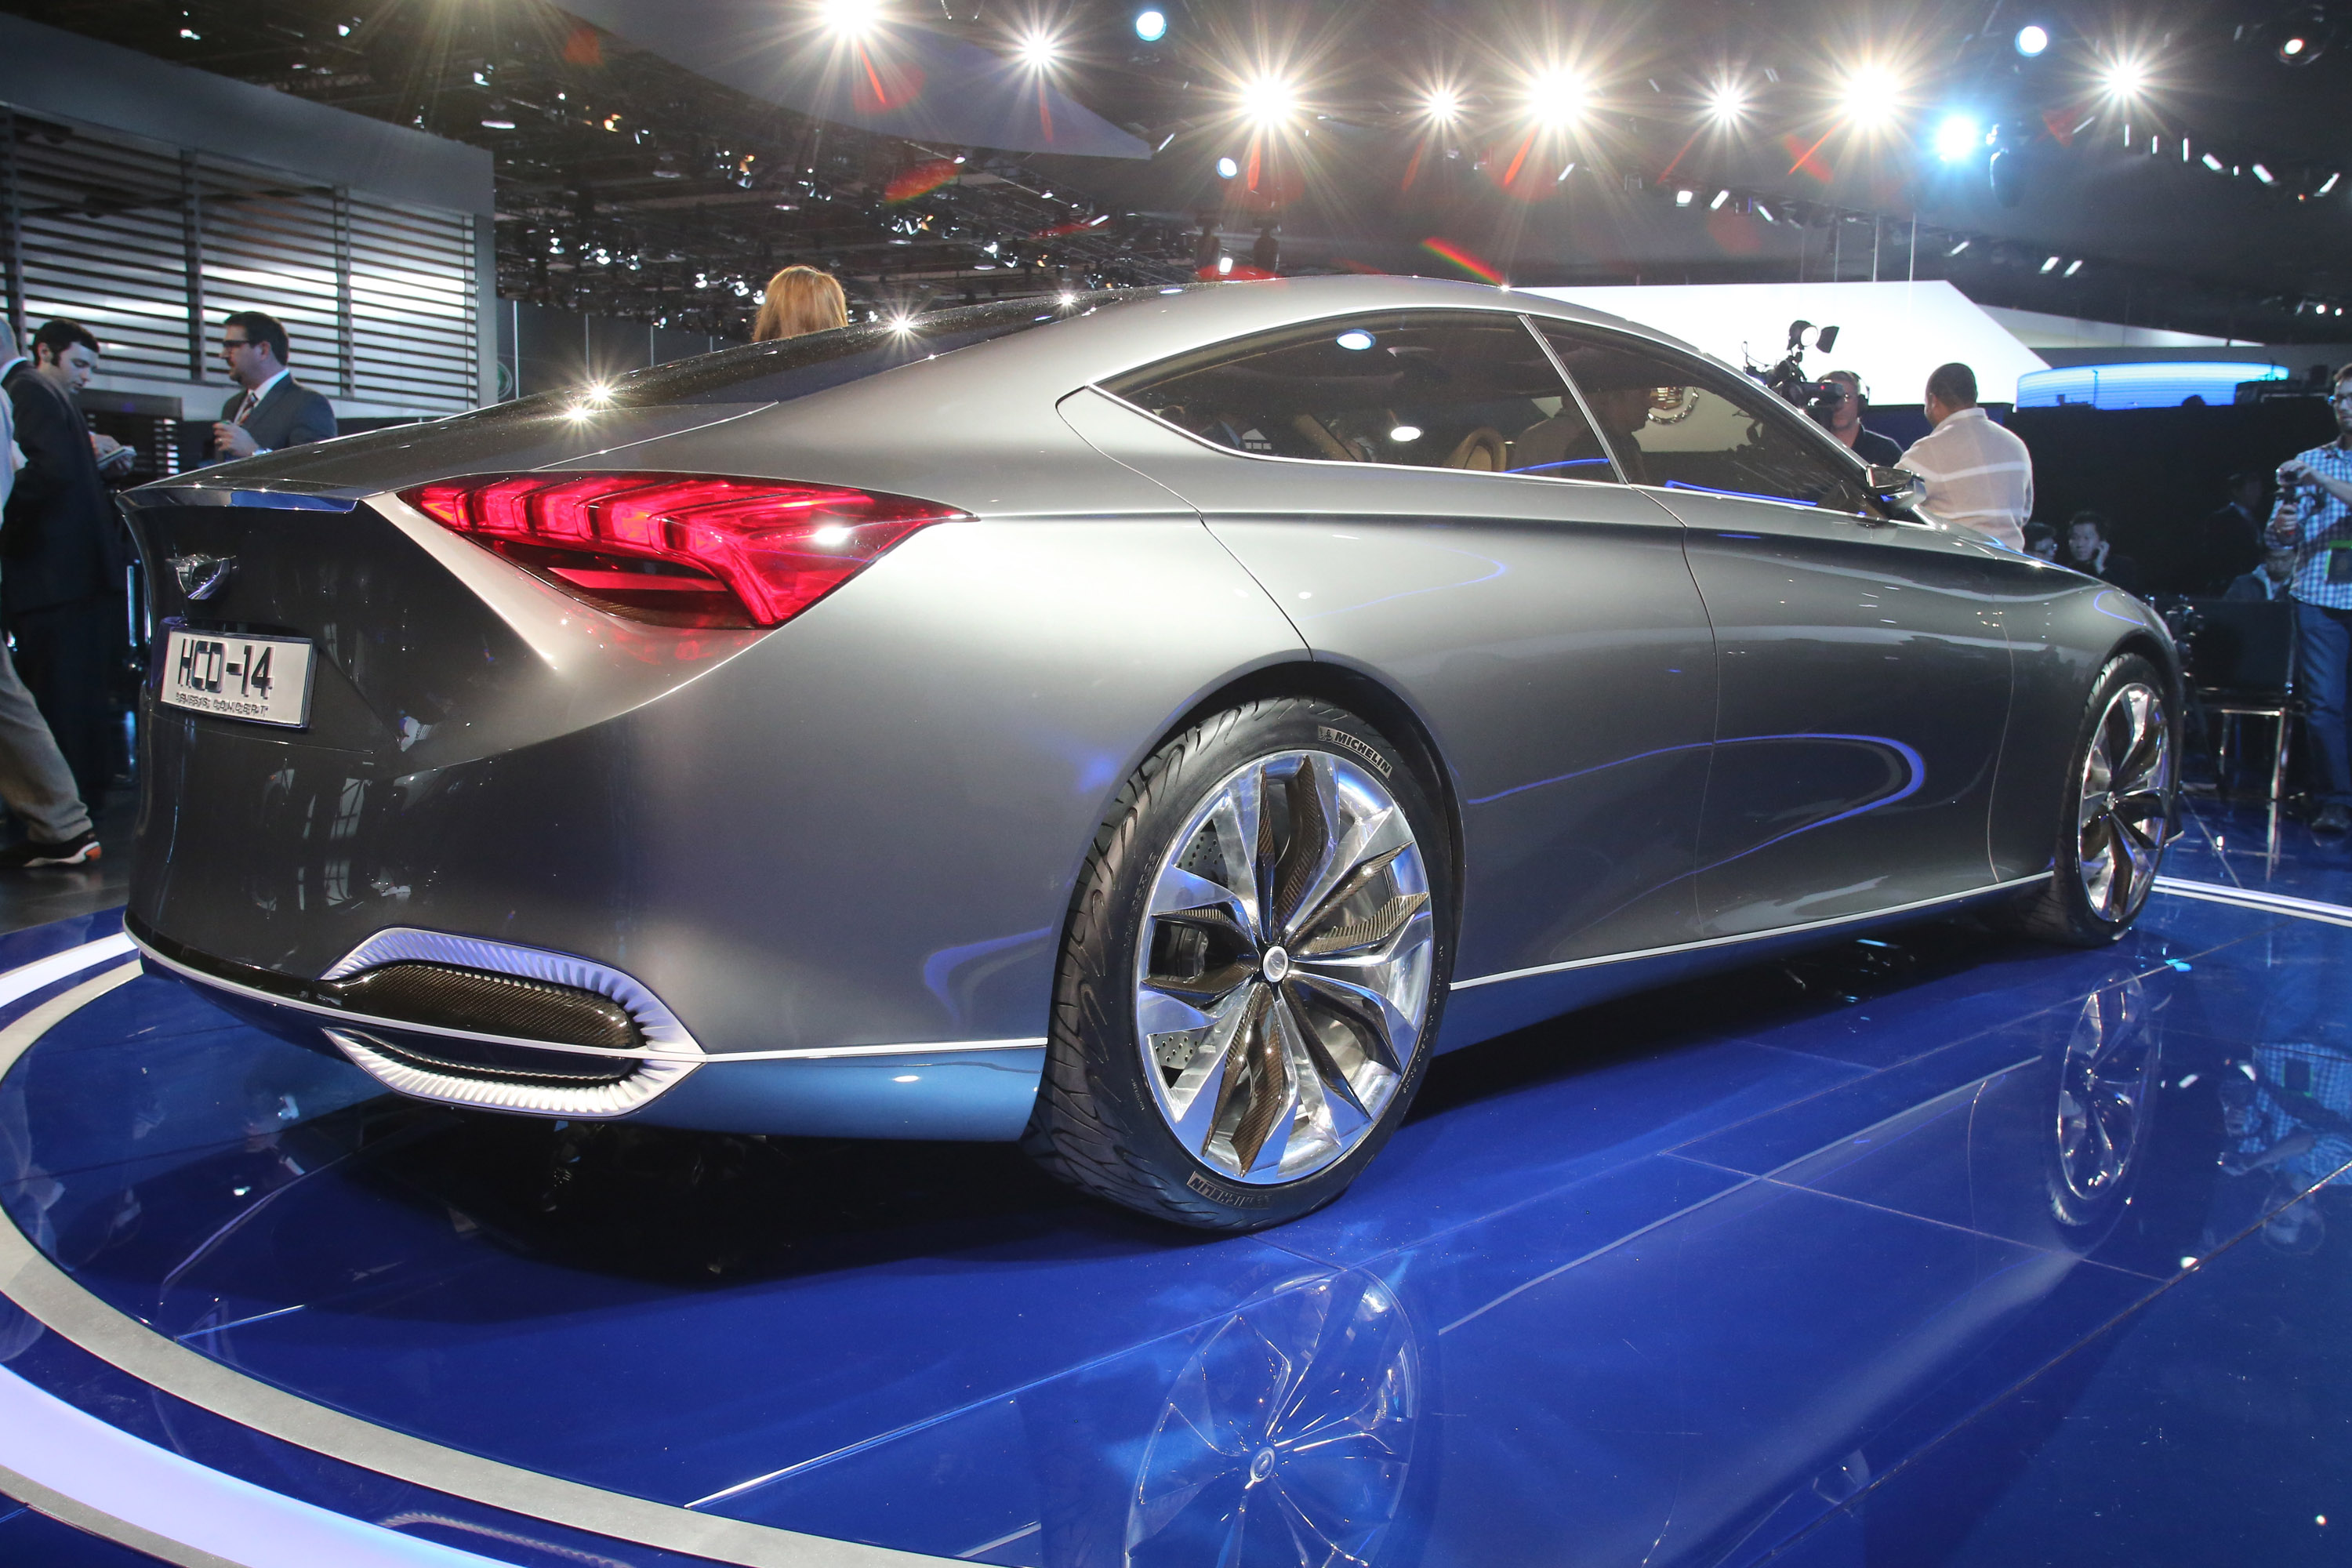 Hyundai HCD-14 Genesis Concept Detroit